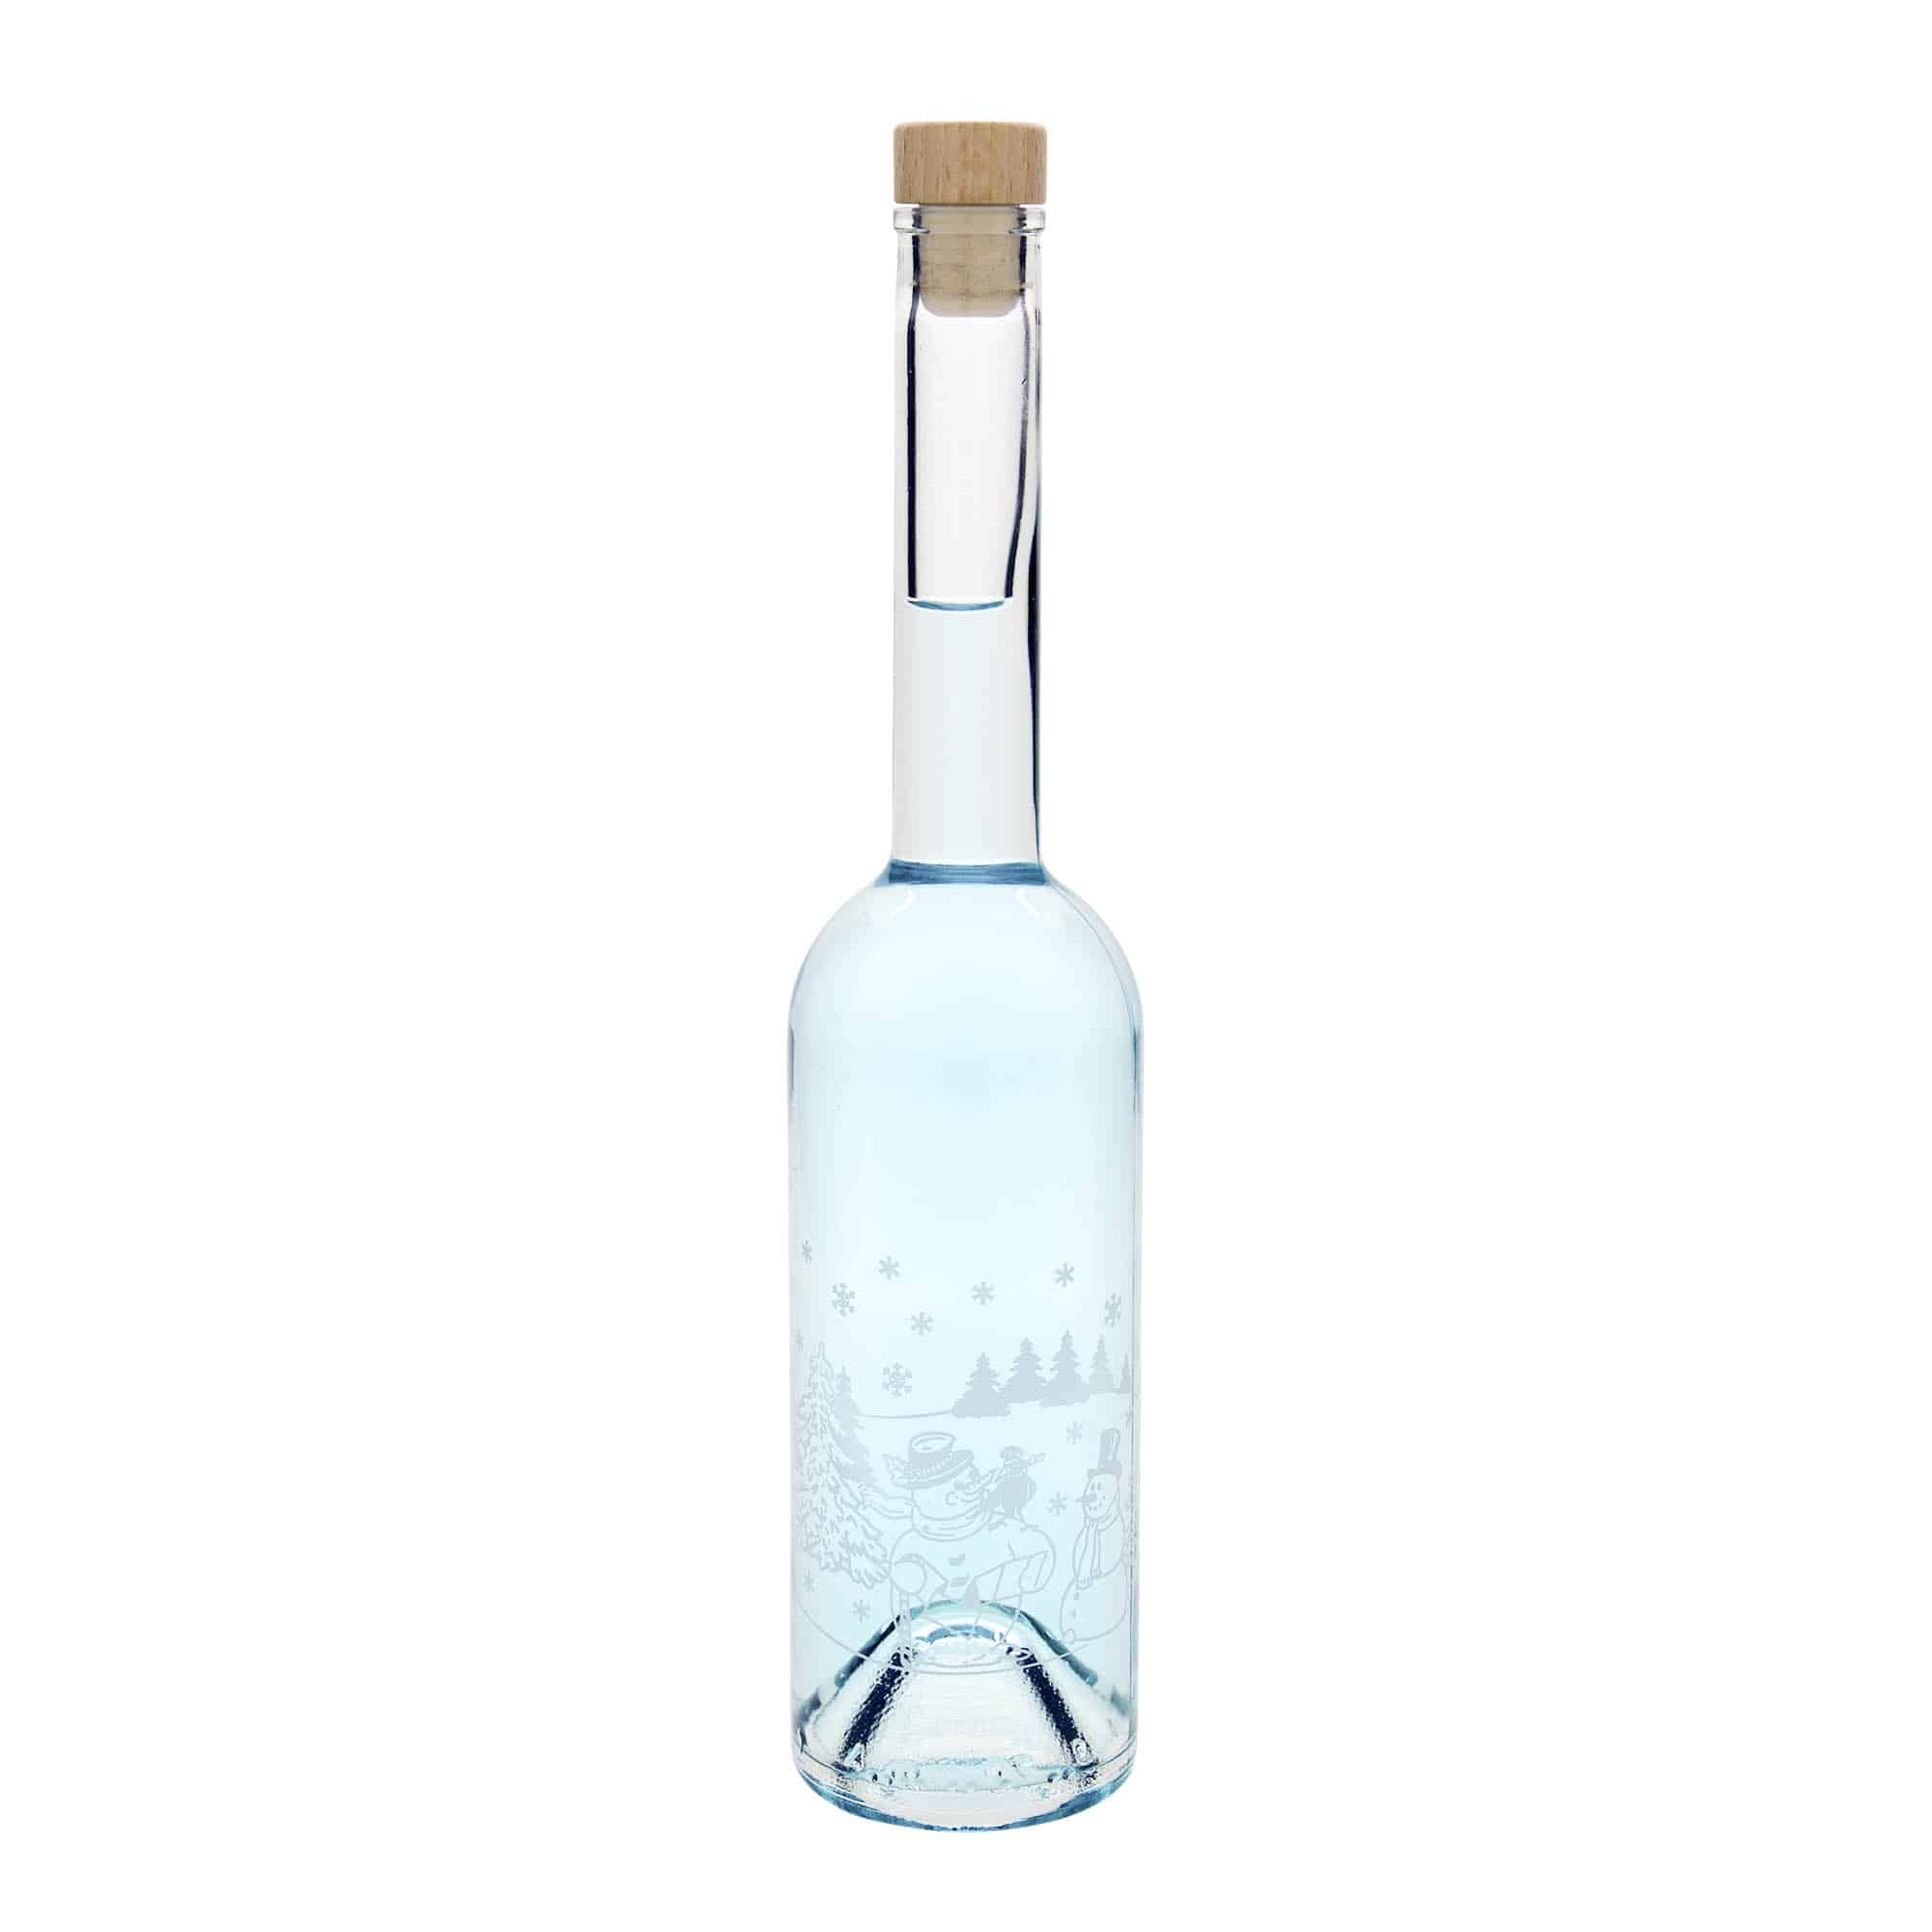 500 ml glass bottle 'Opera', print: snowman bottle, closure: cork